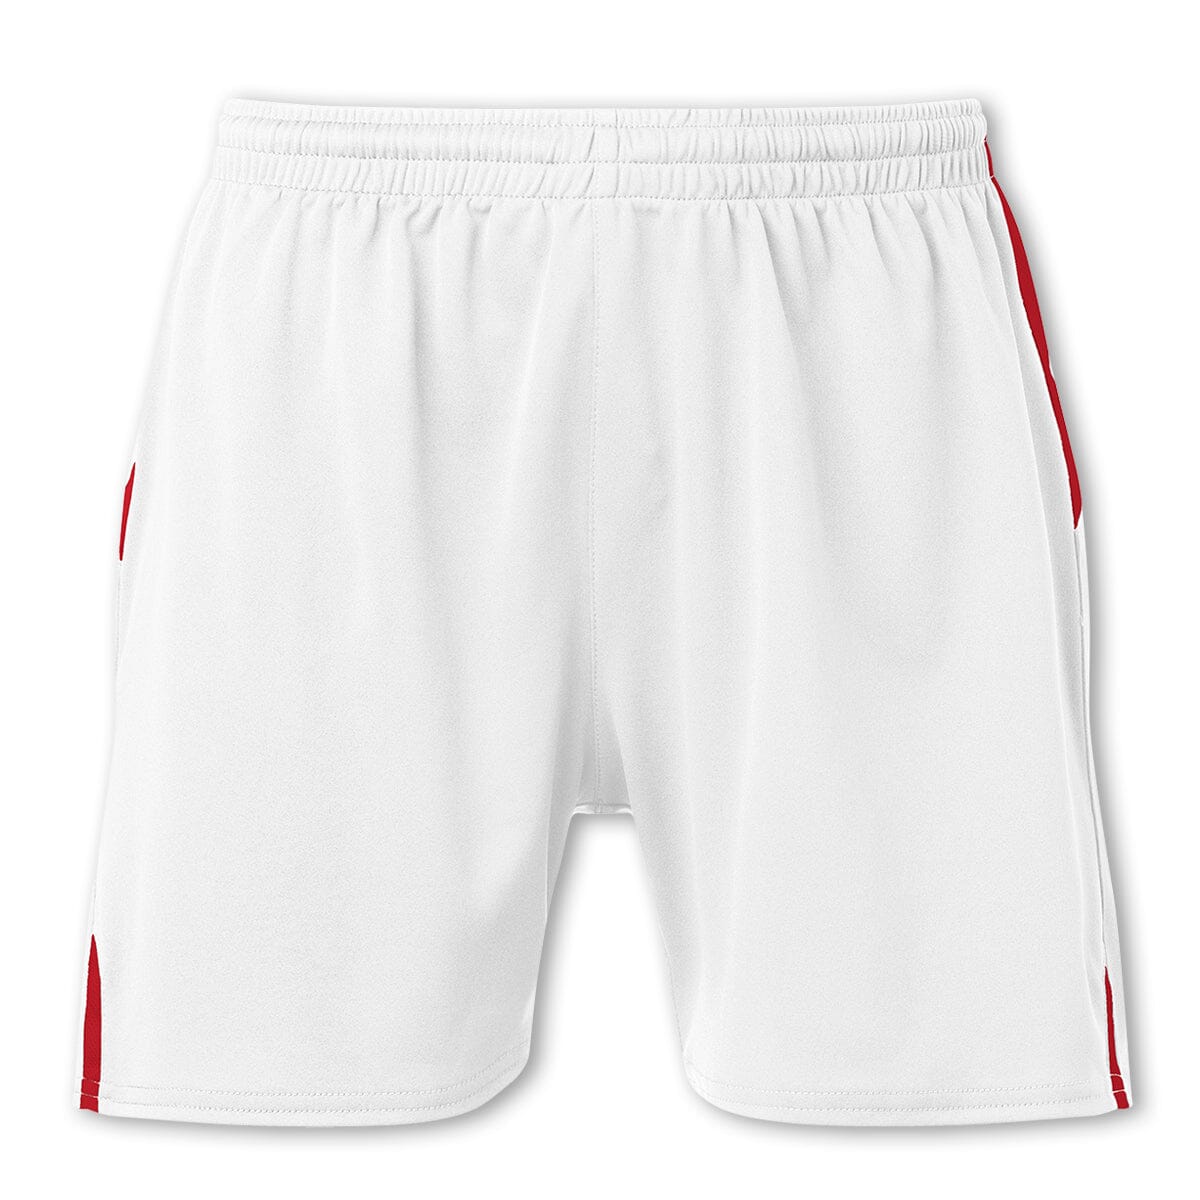 Continental Short - Female Short Xara Soccer White/Red Womens Large 